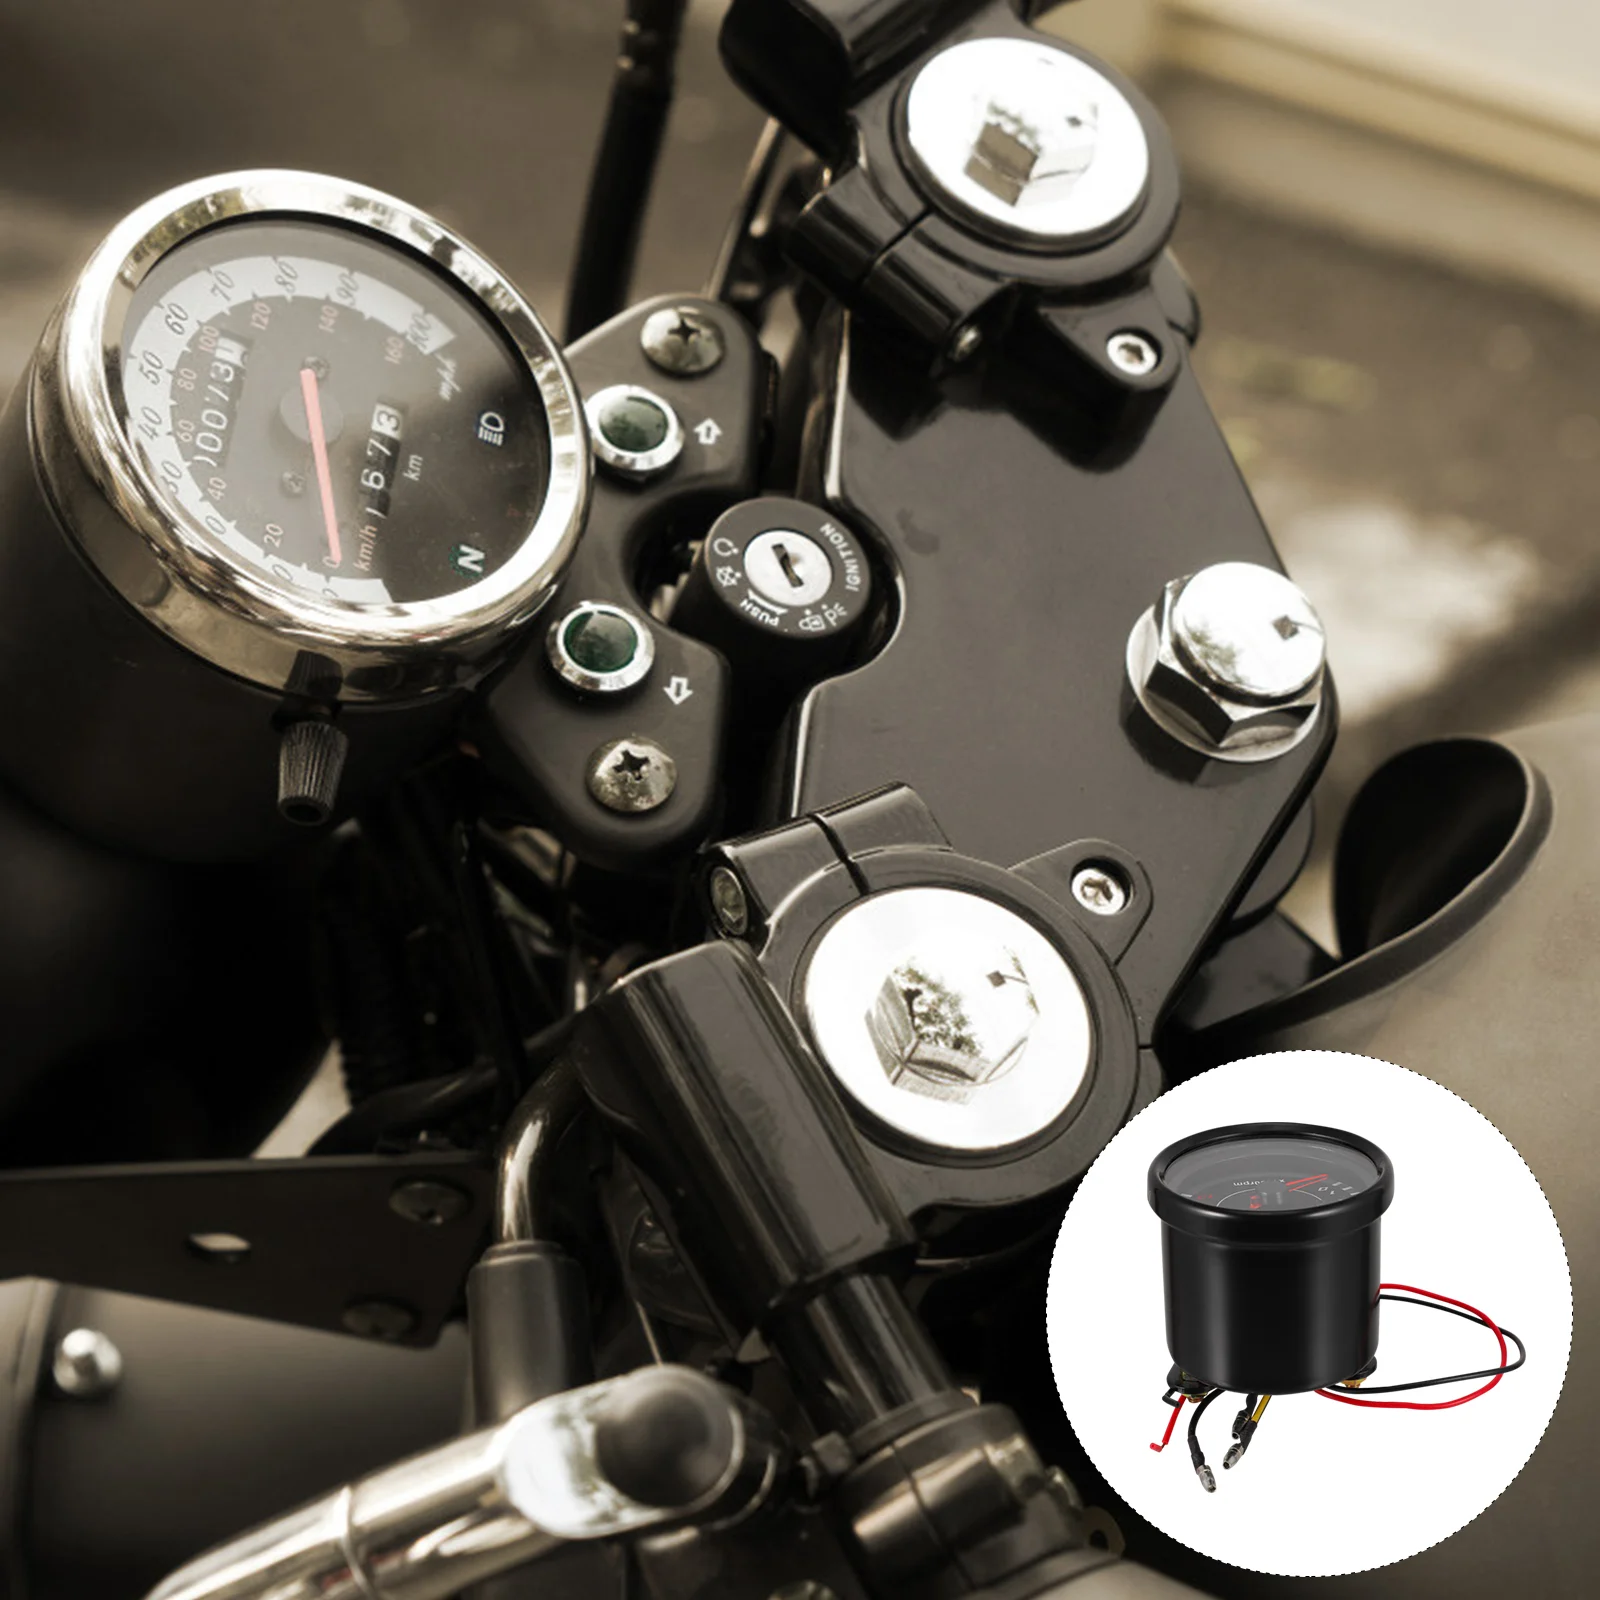 

Tachometer Digital Modified Motorcycle Gauge LED Backlit Motorbike Aluminum Alloy Backlight Speeds